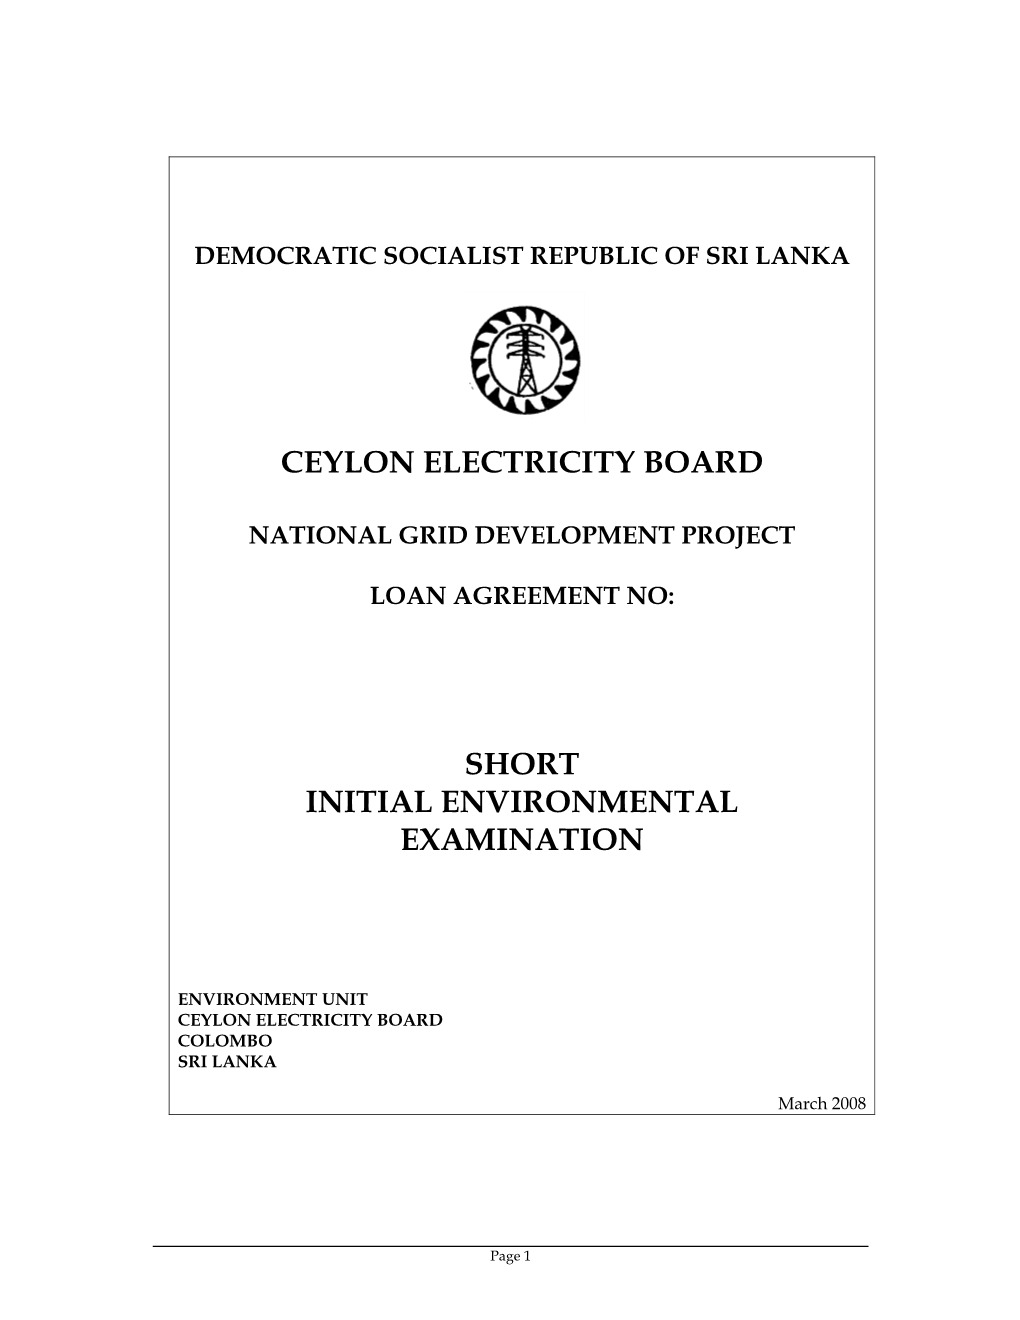 Ceylon Electricity Board Short Initial Environmental